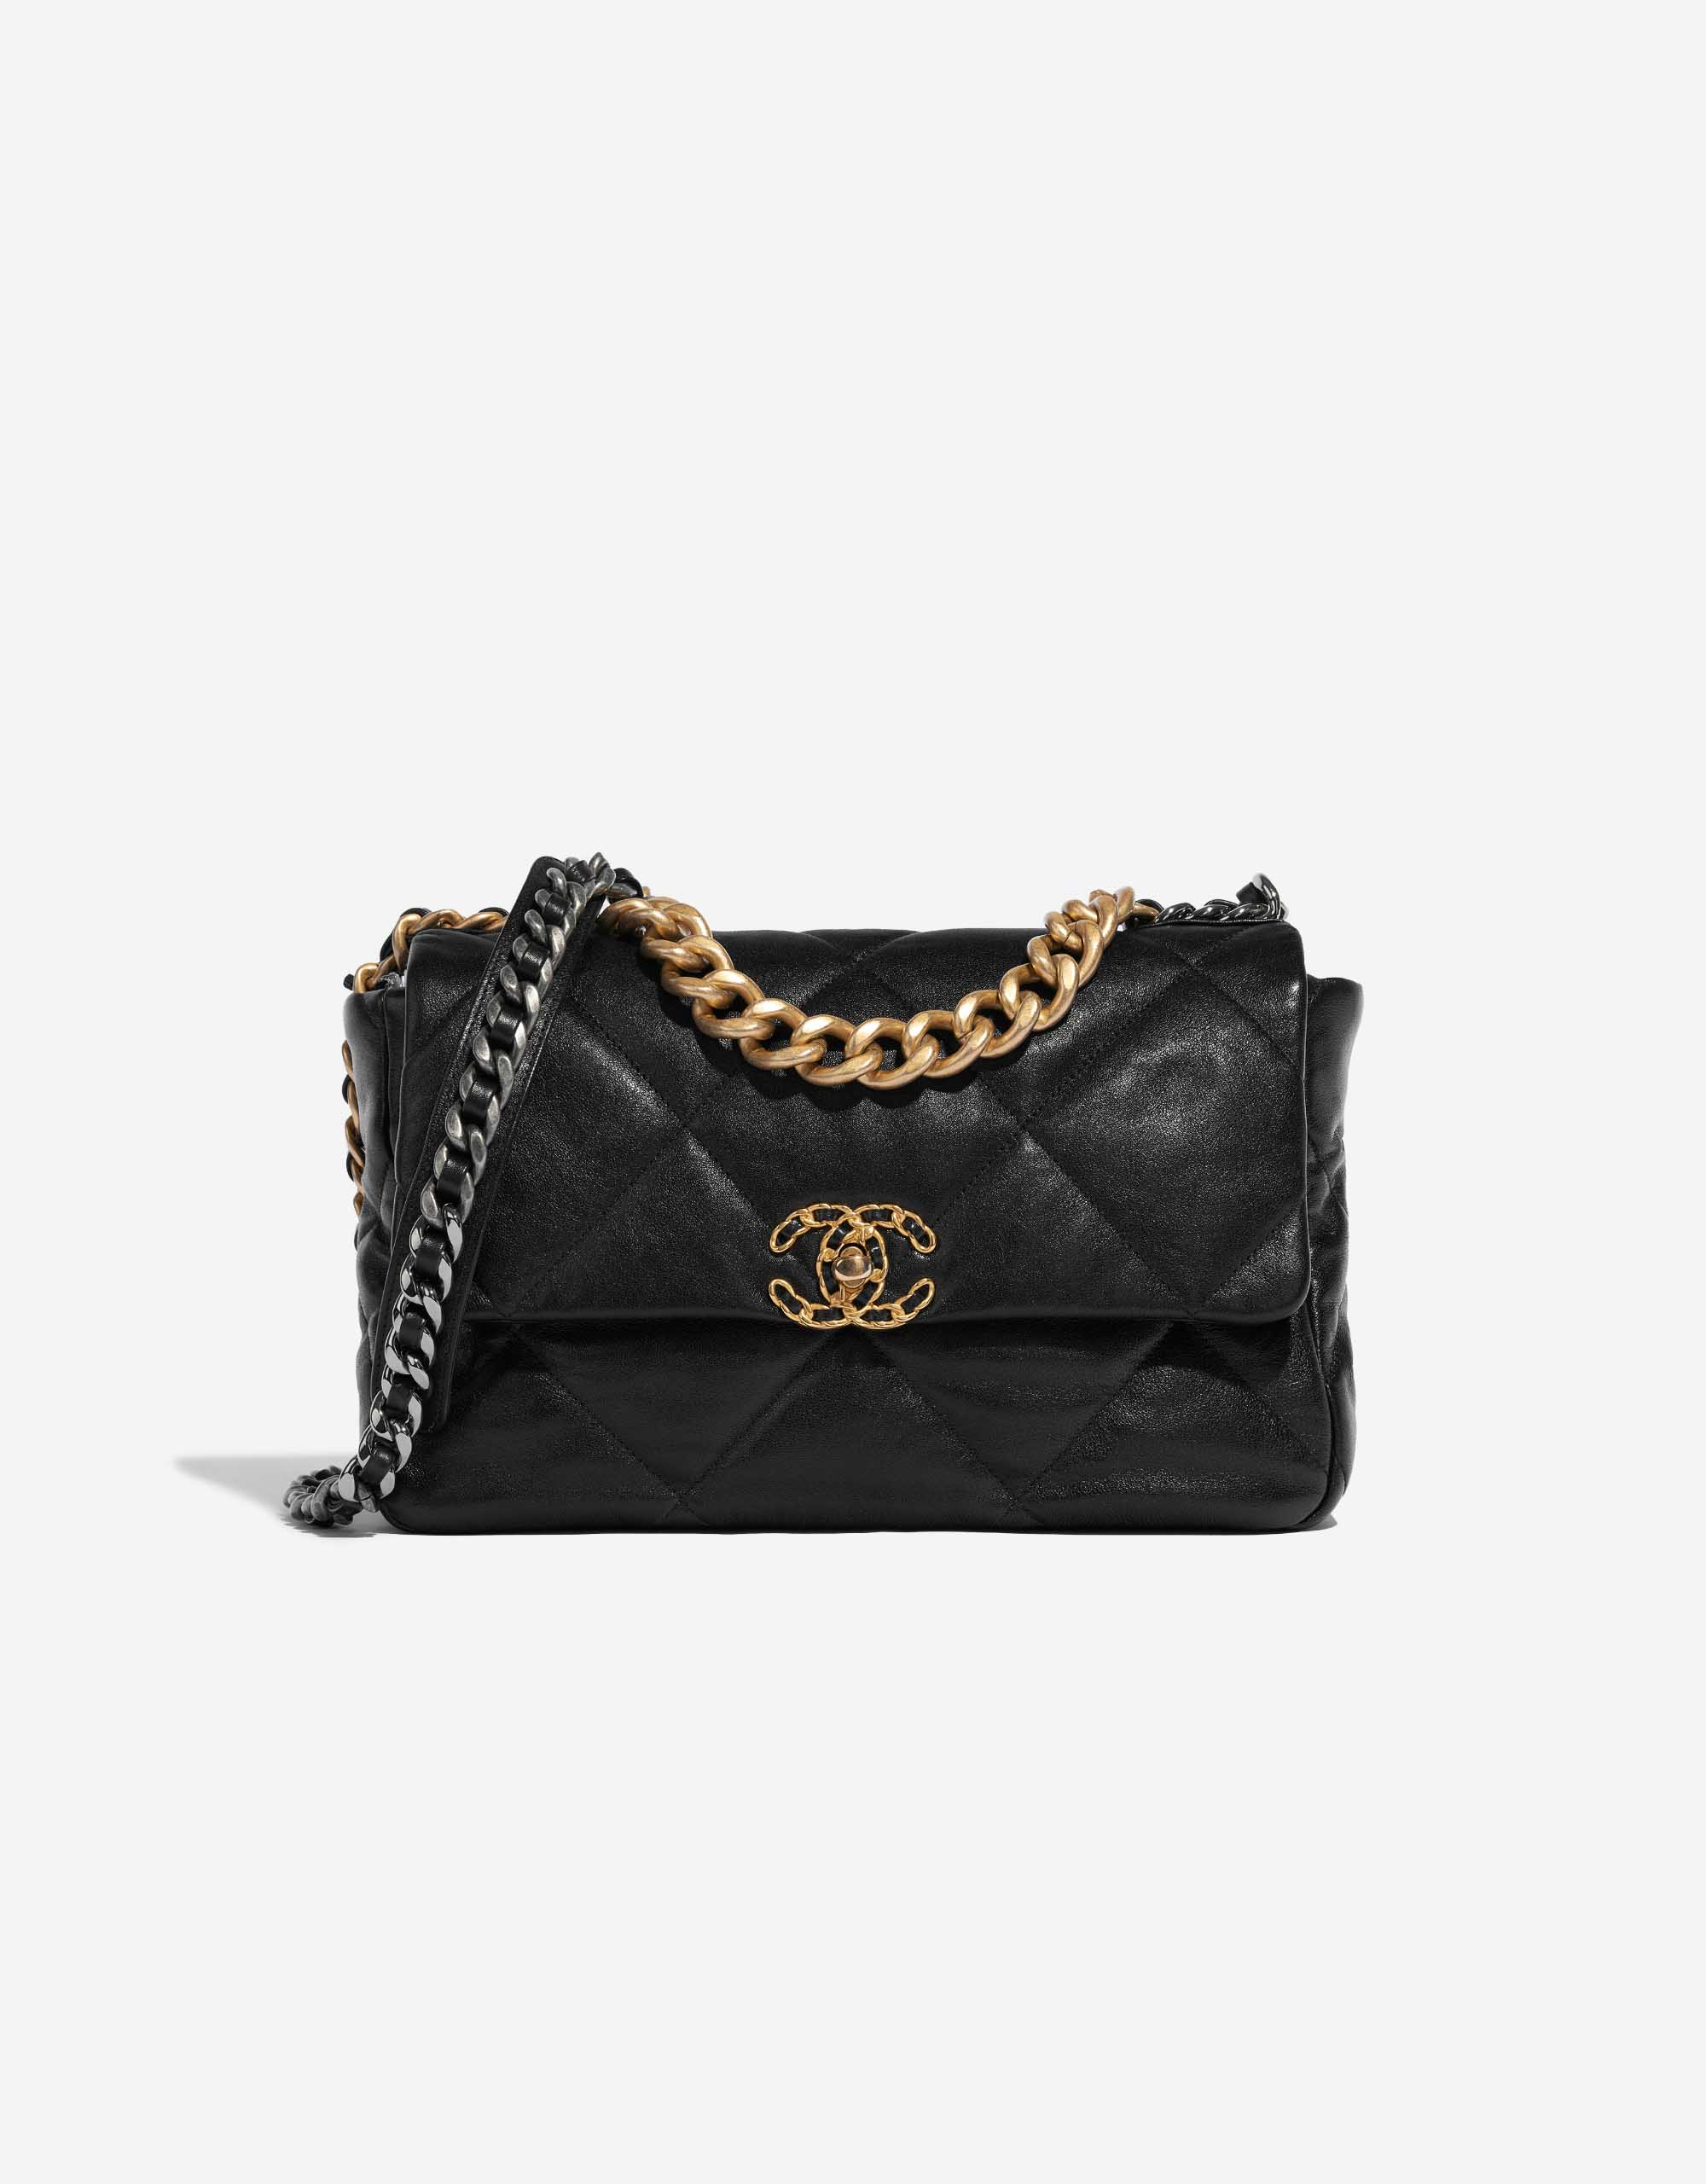 Chanel 19 Large Flap Bag Lambskin Black | SACLÀB